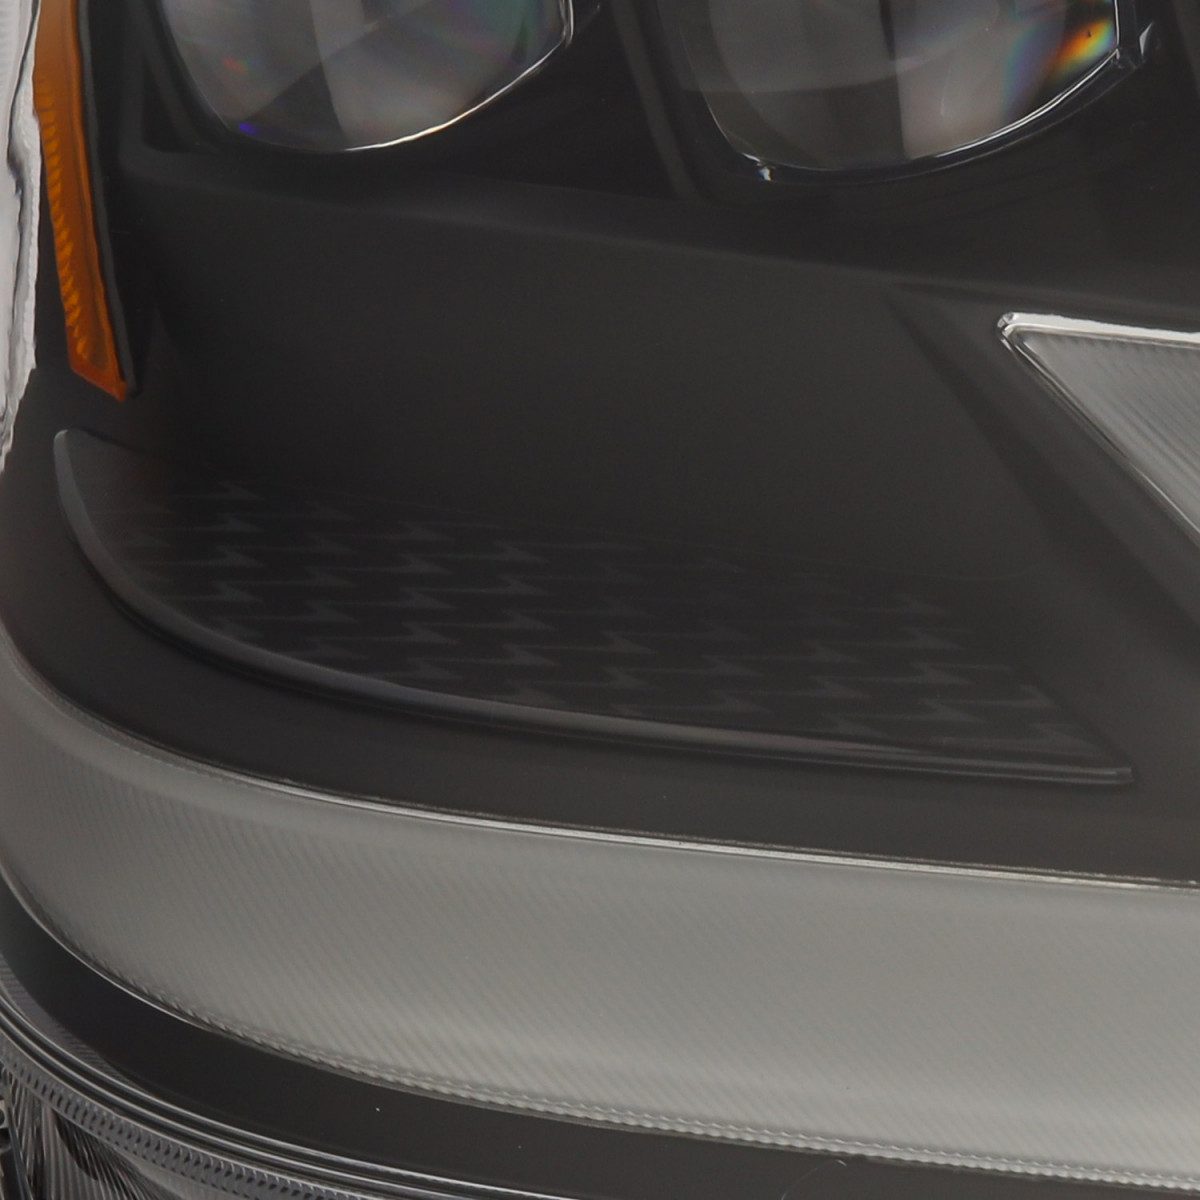 Alpharex NOVA-Series LED Projector Headlights Black 14-19 Lexus GX460